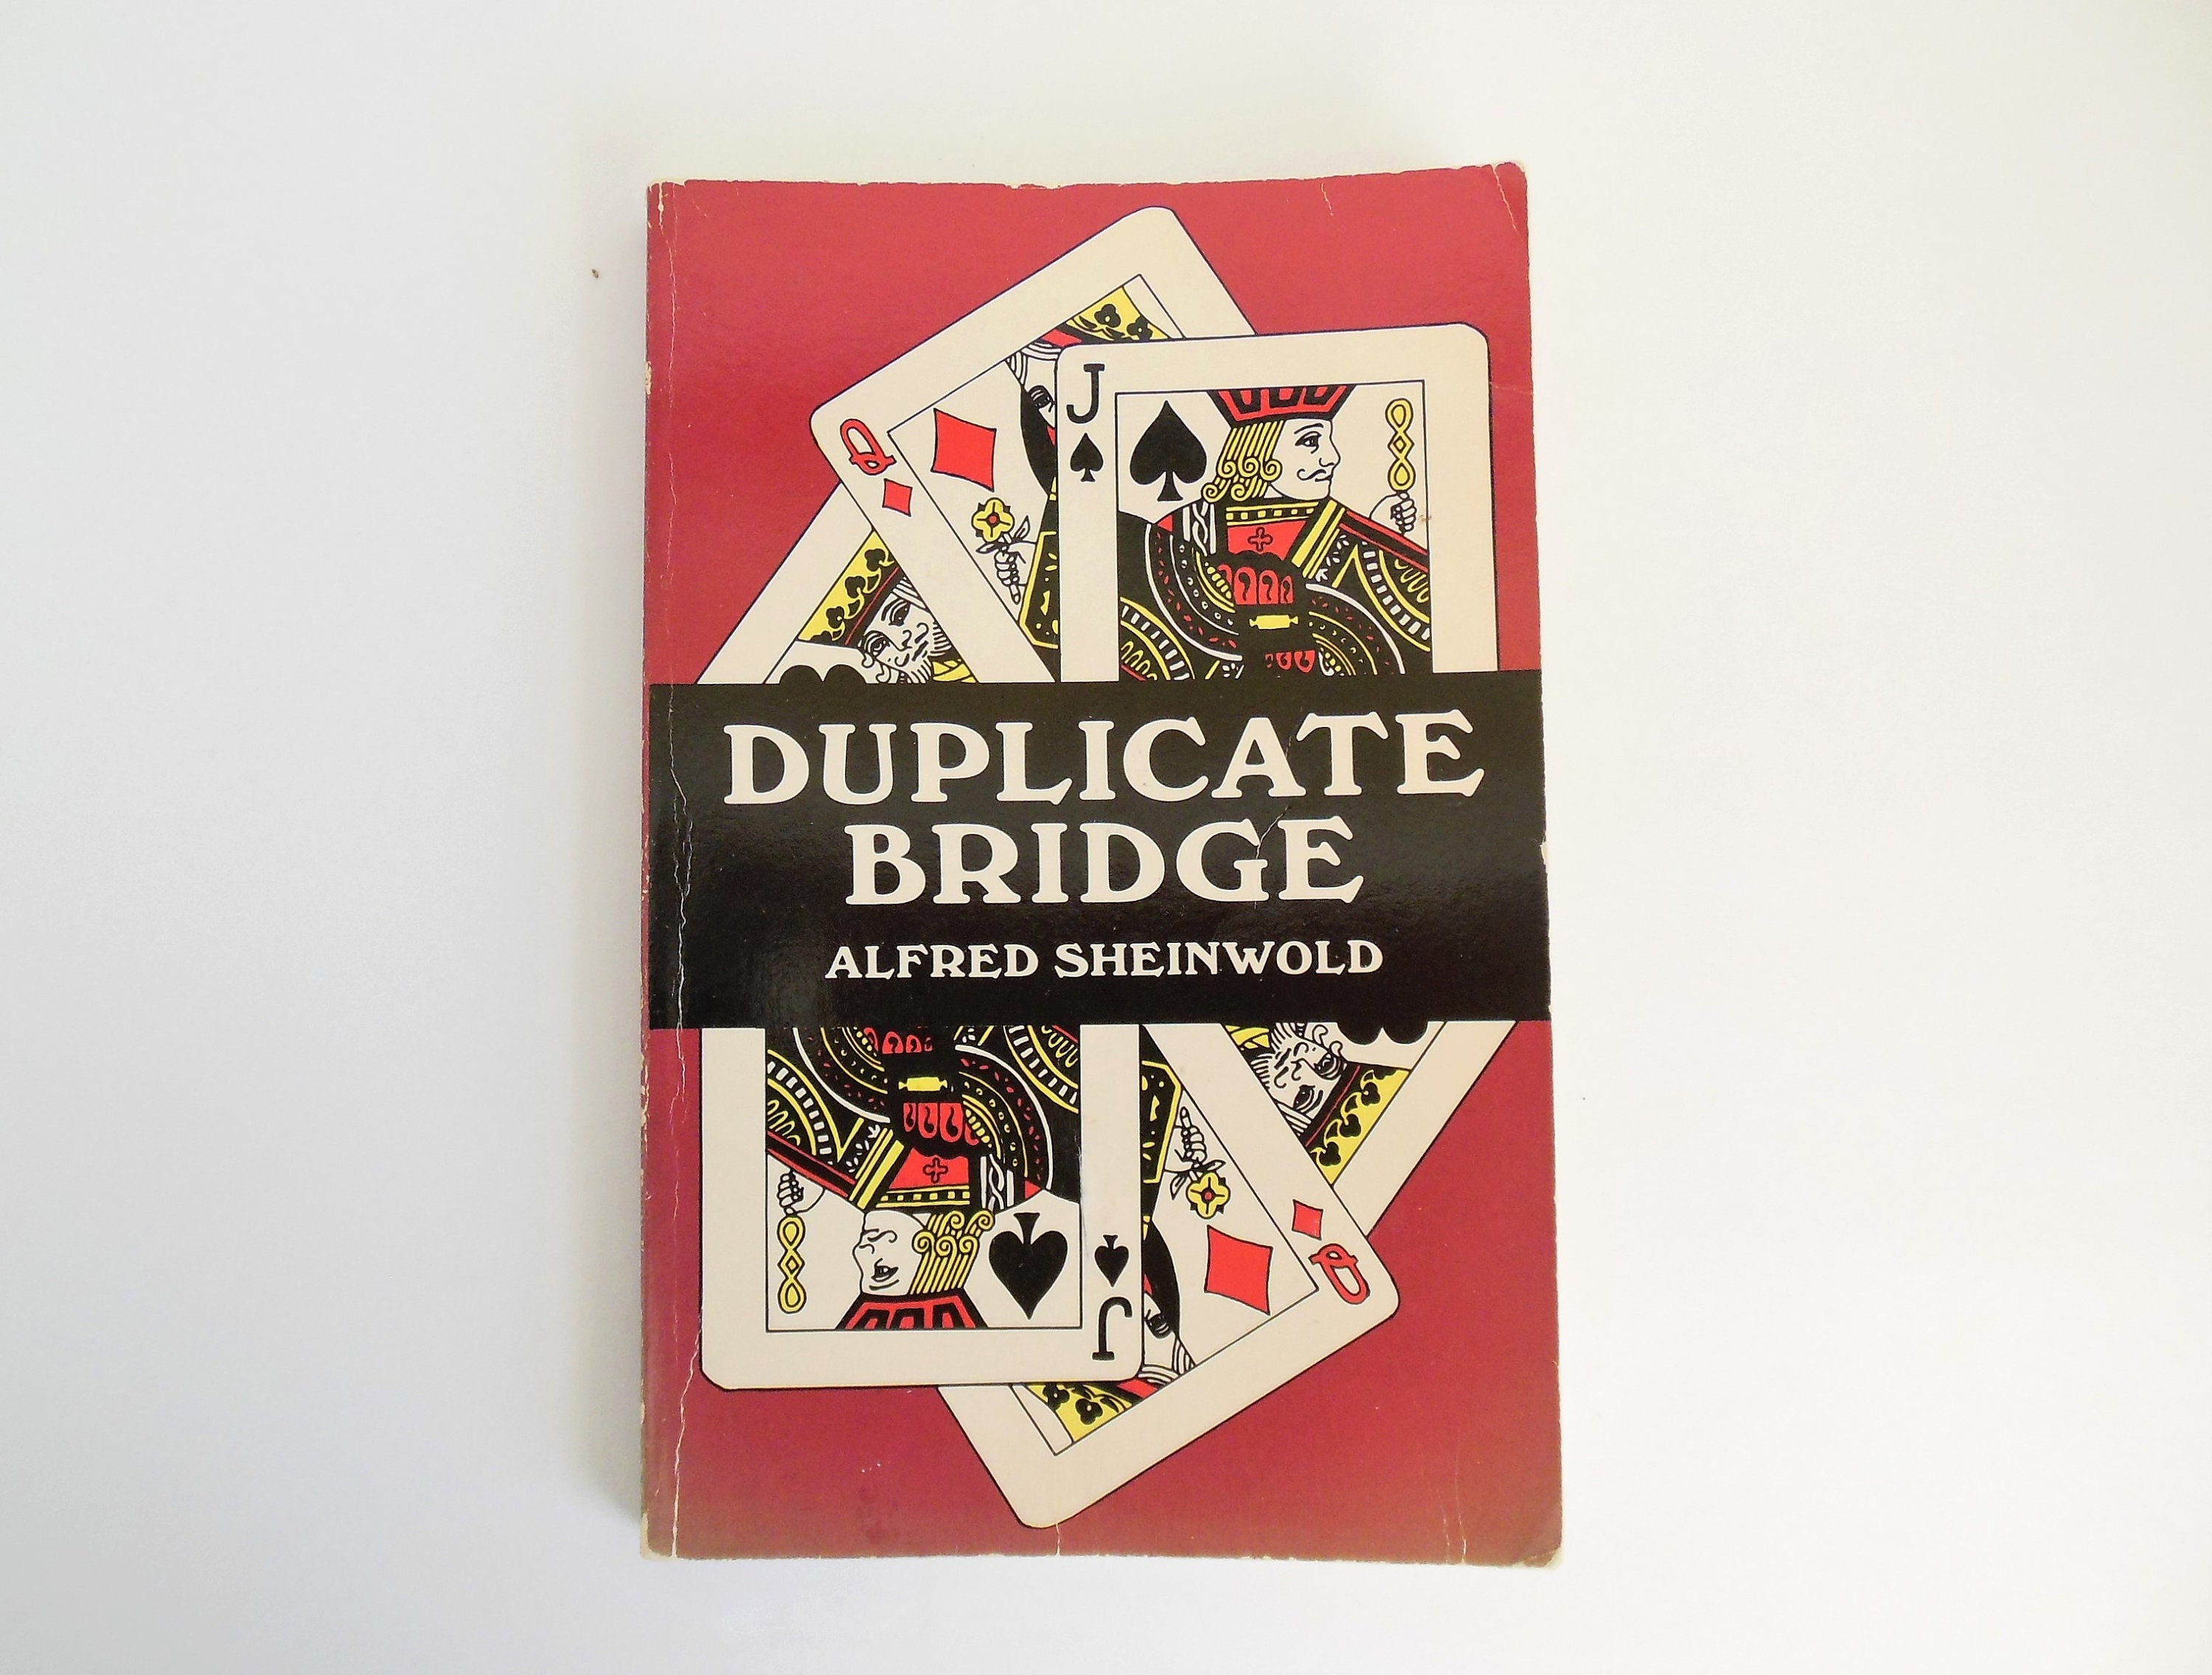 Bridge Supplies, Playing Cards, Books, Duplicate Boards